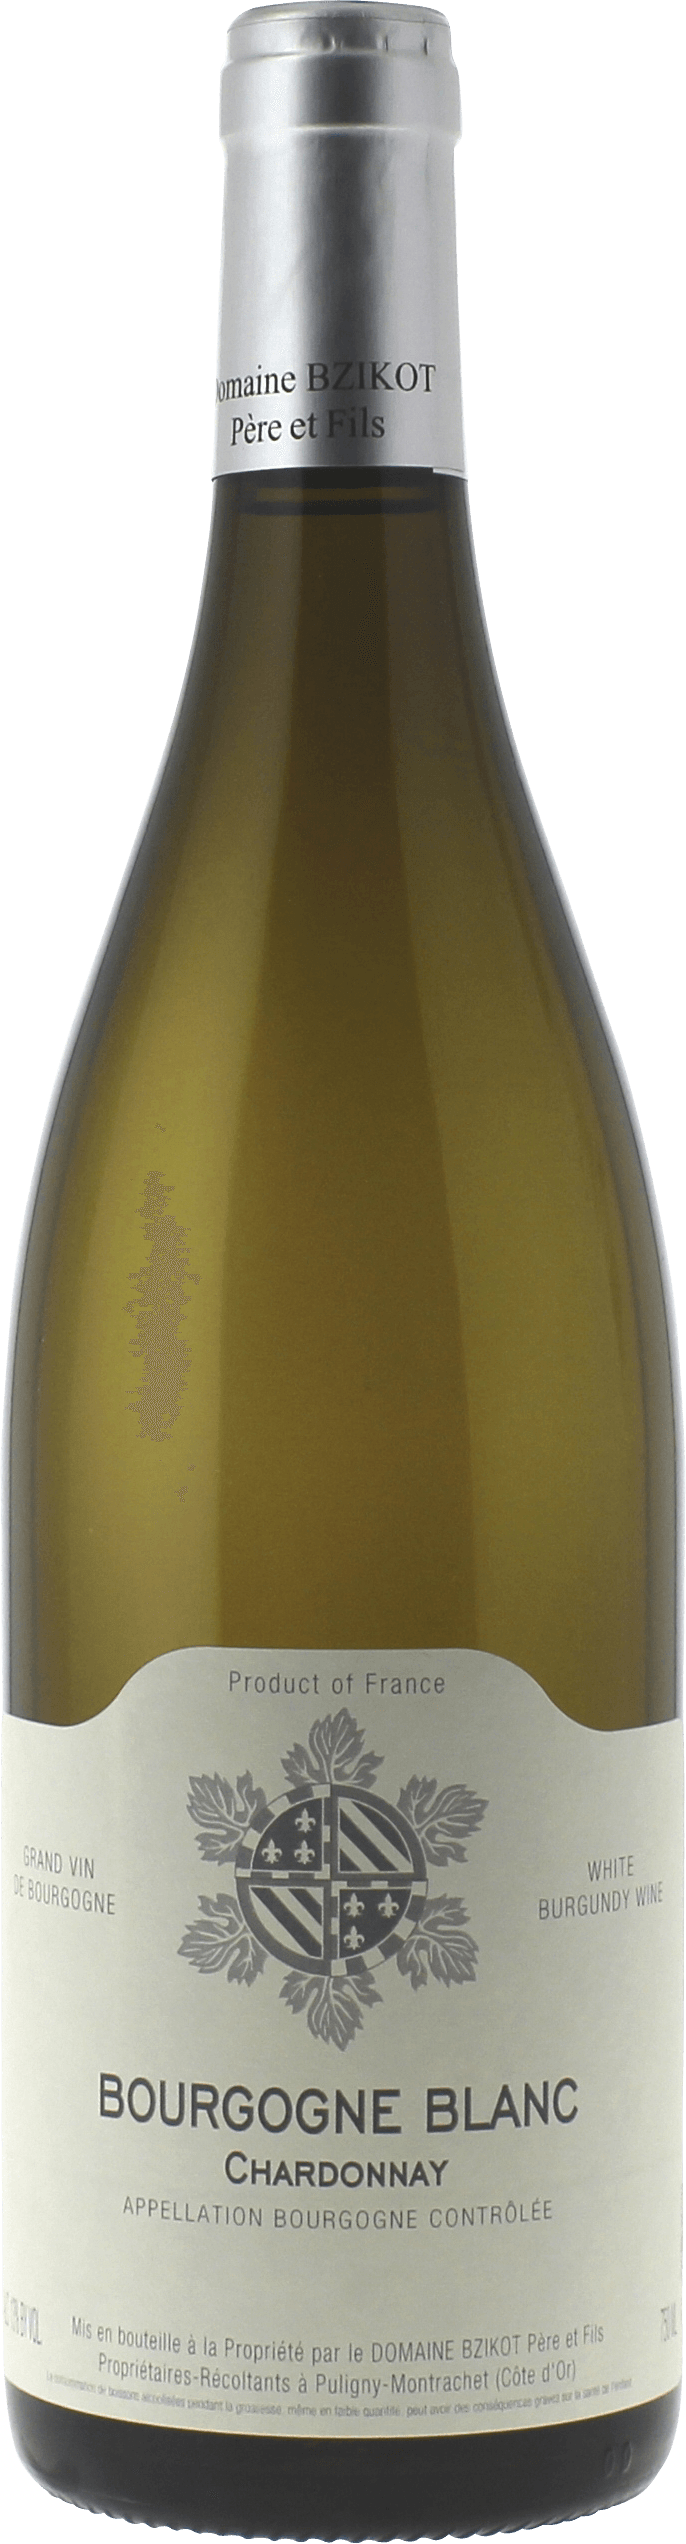 Bourgogne chardonnay 2017 Domaine BZIKOT Sylvain, Bourgogne blanc